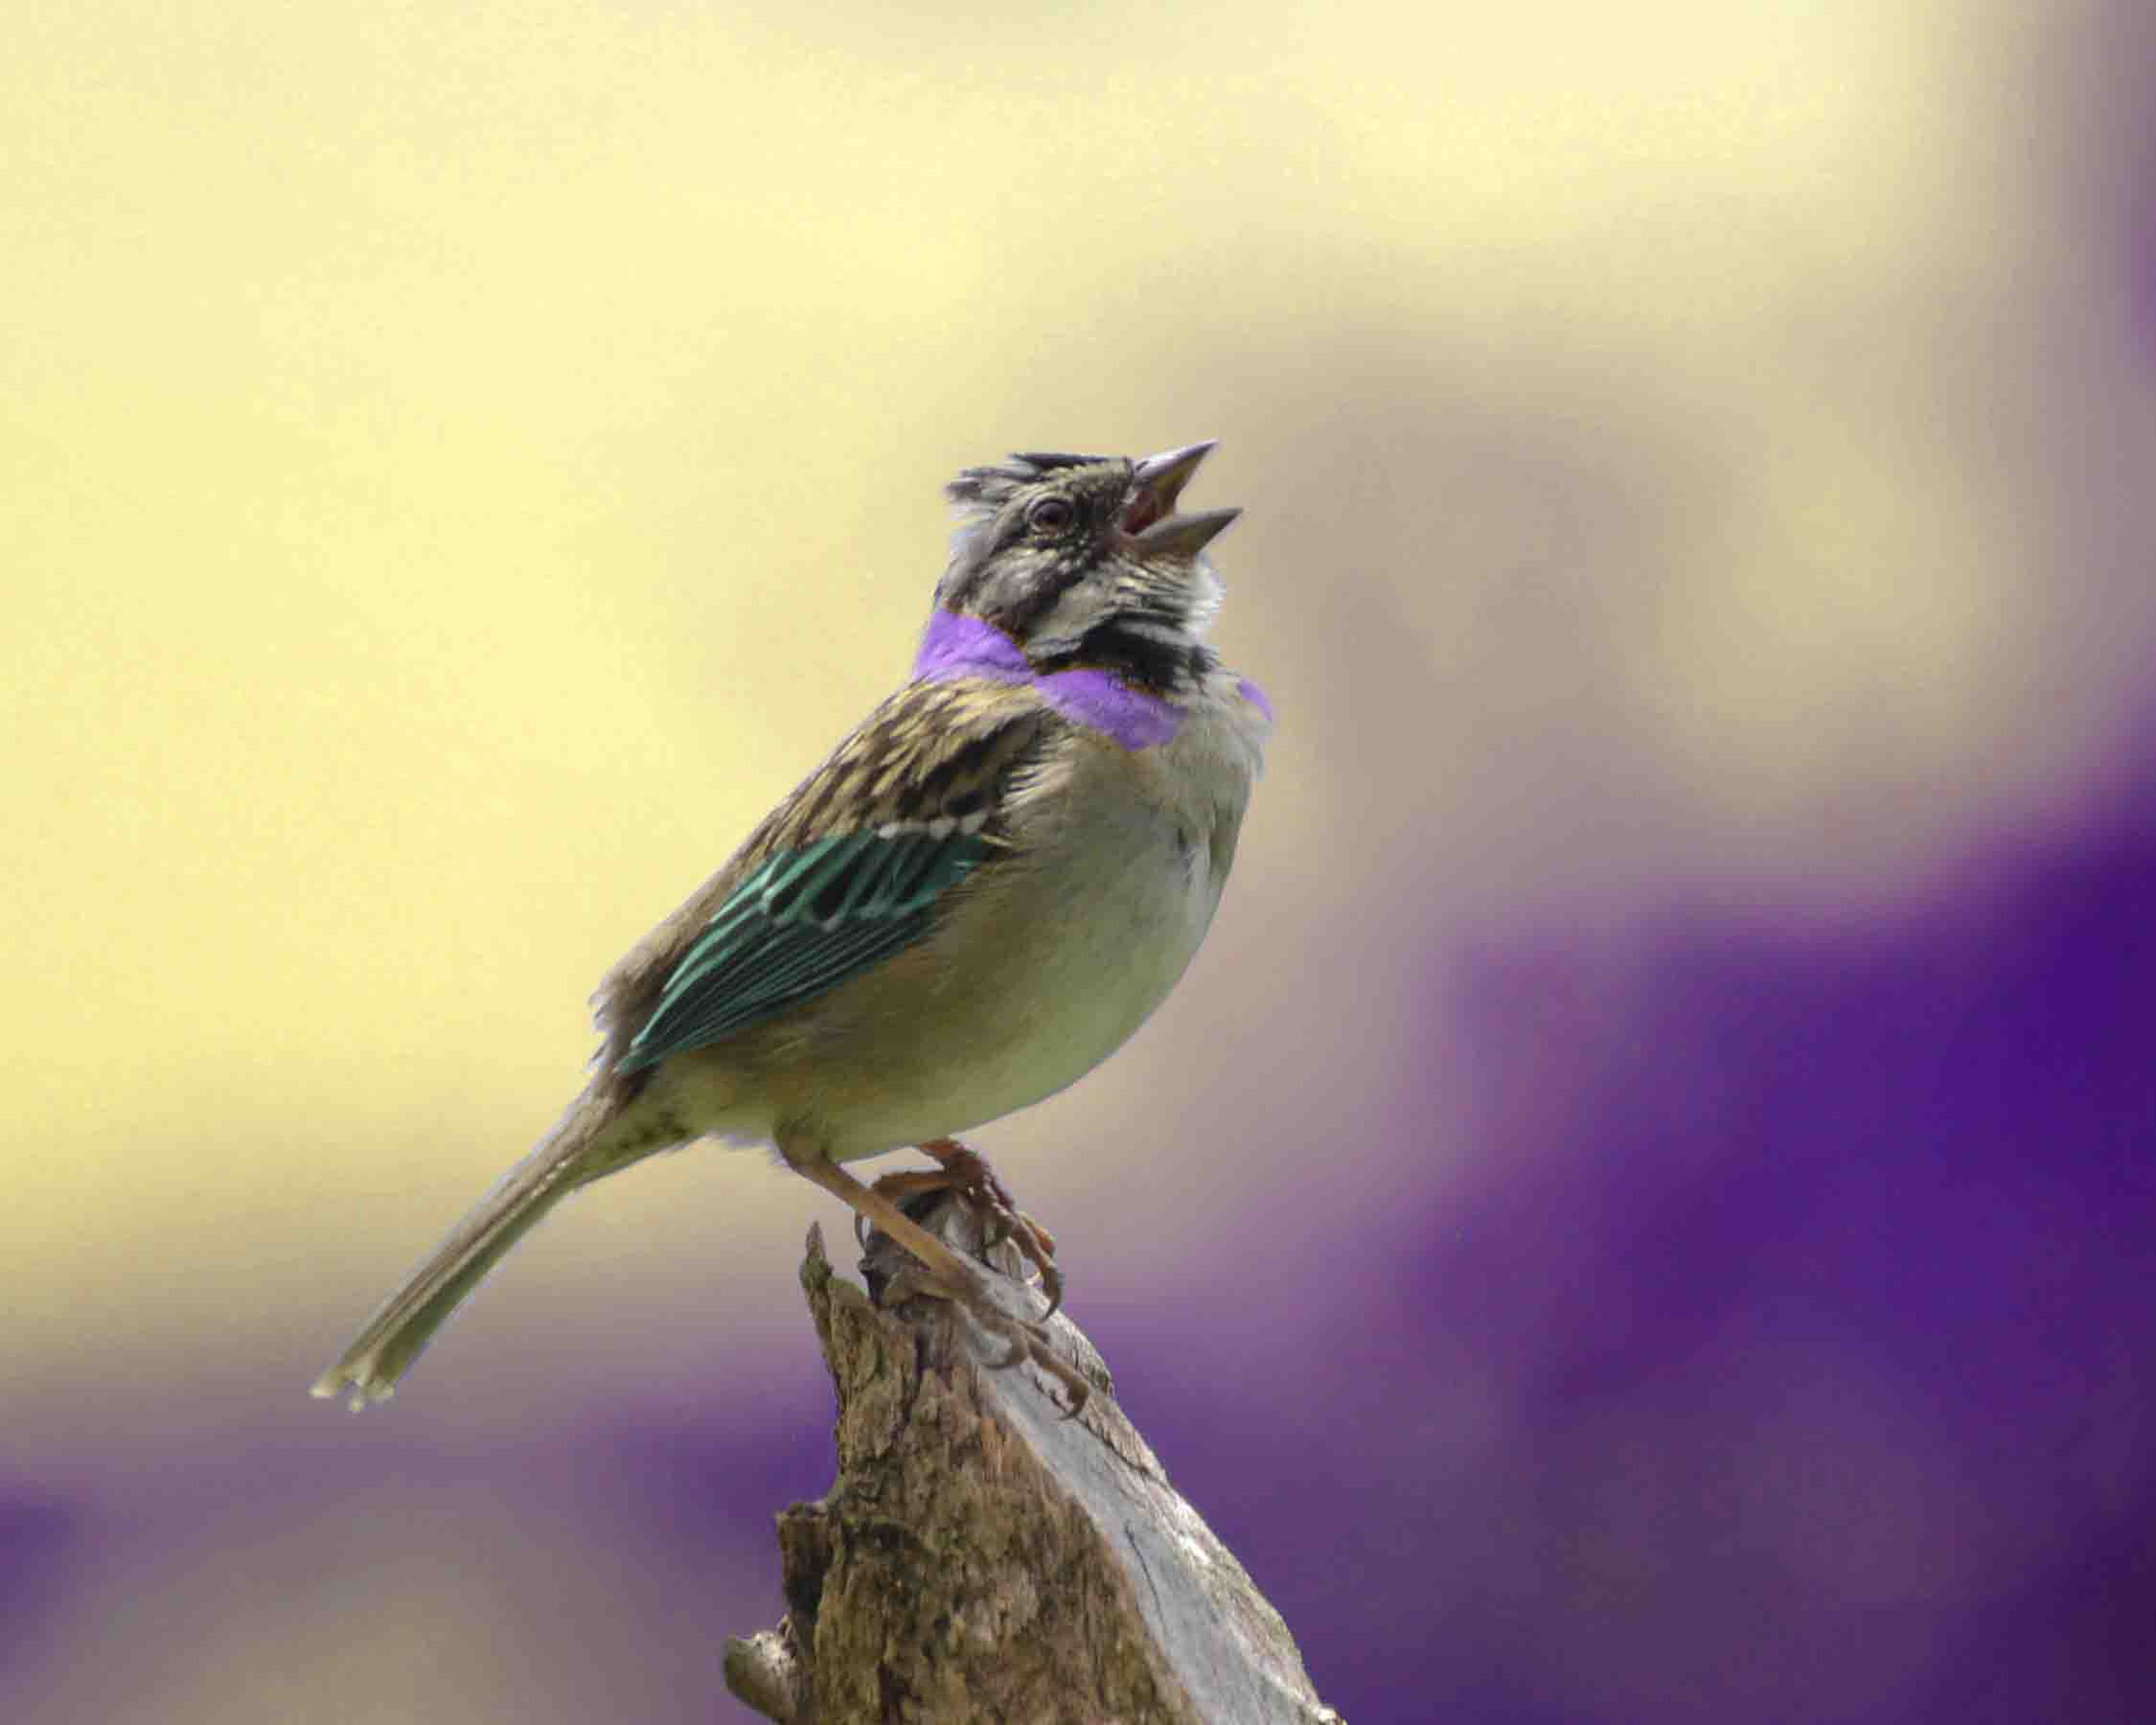 rufous-collared sparrow